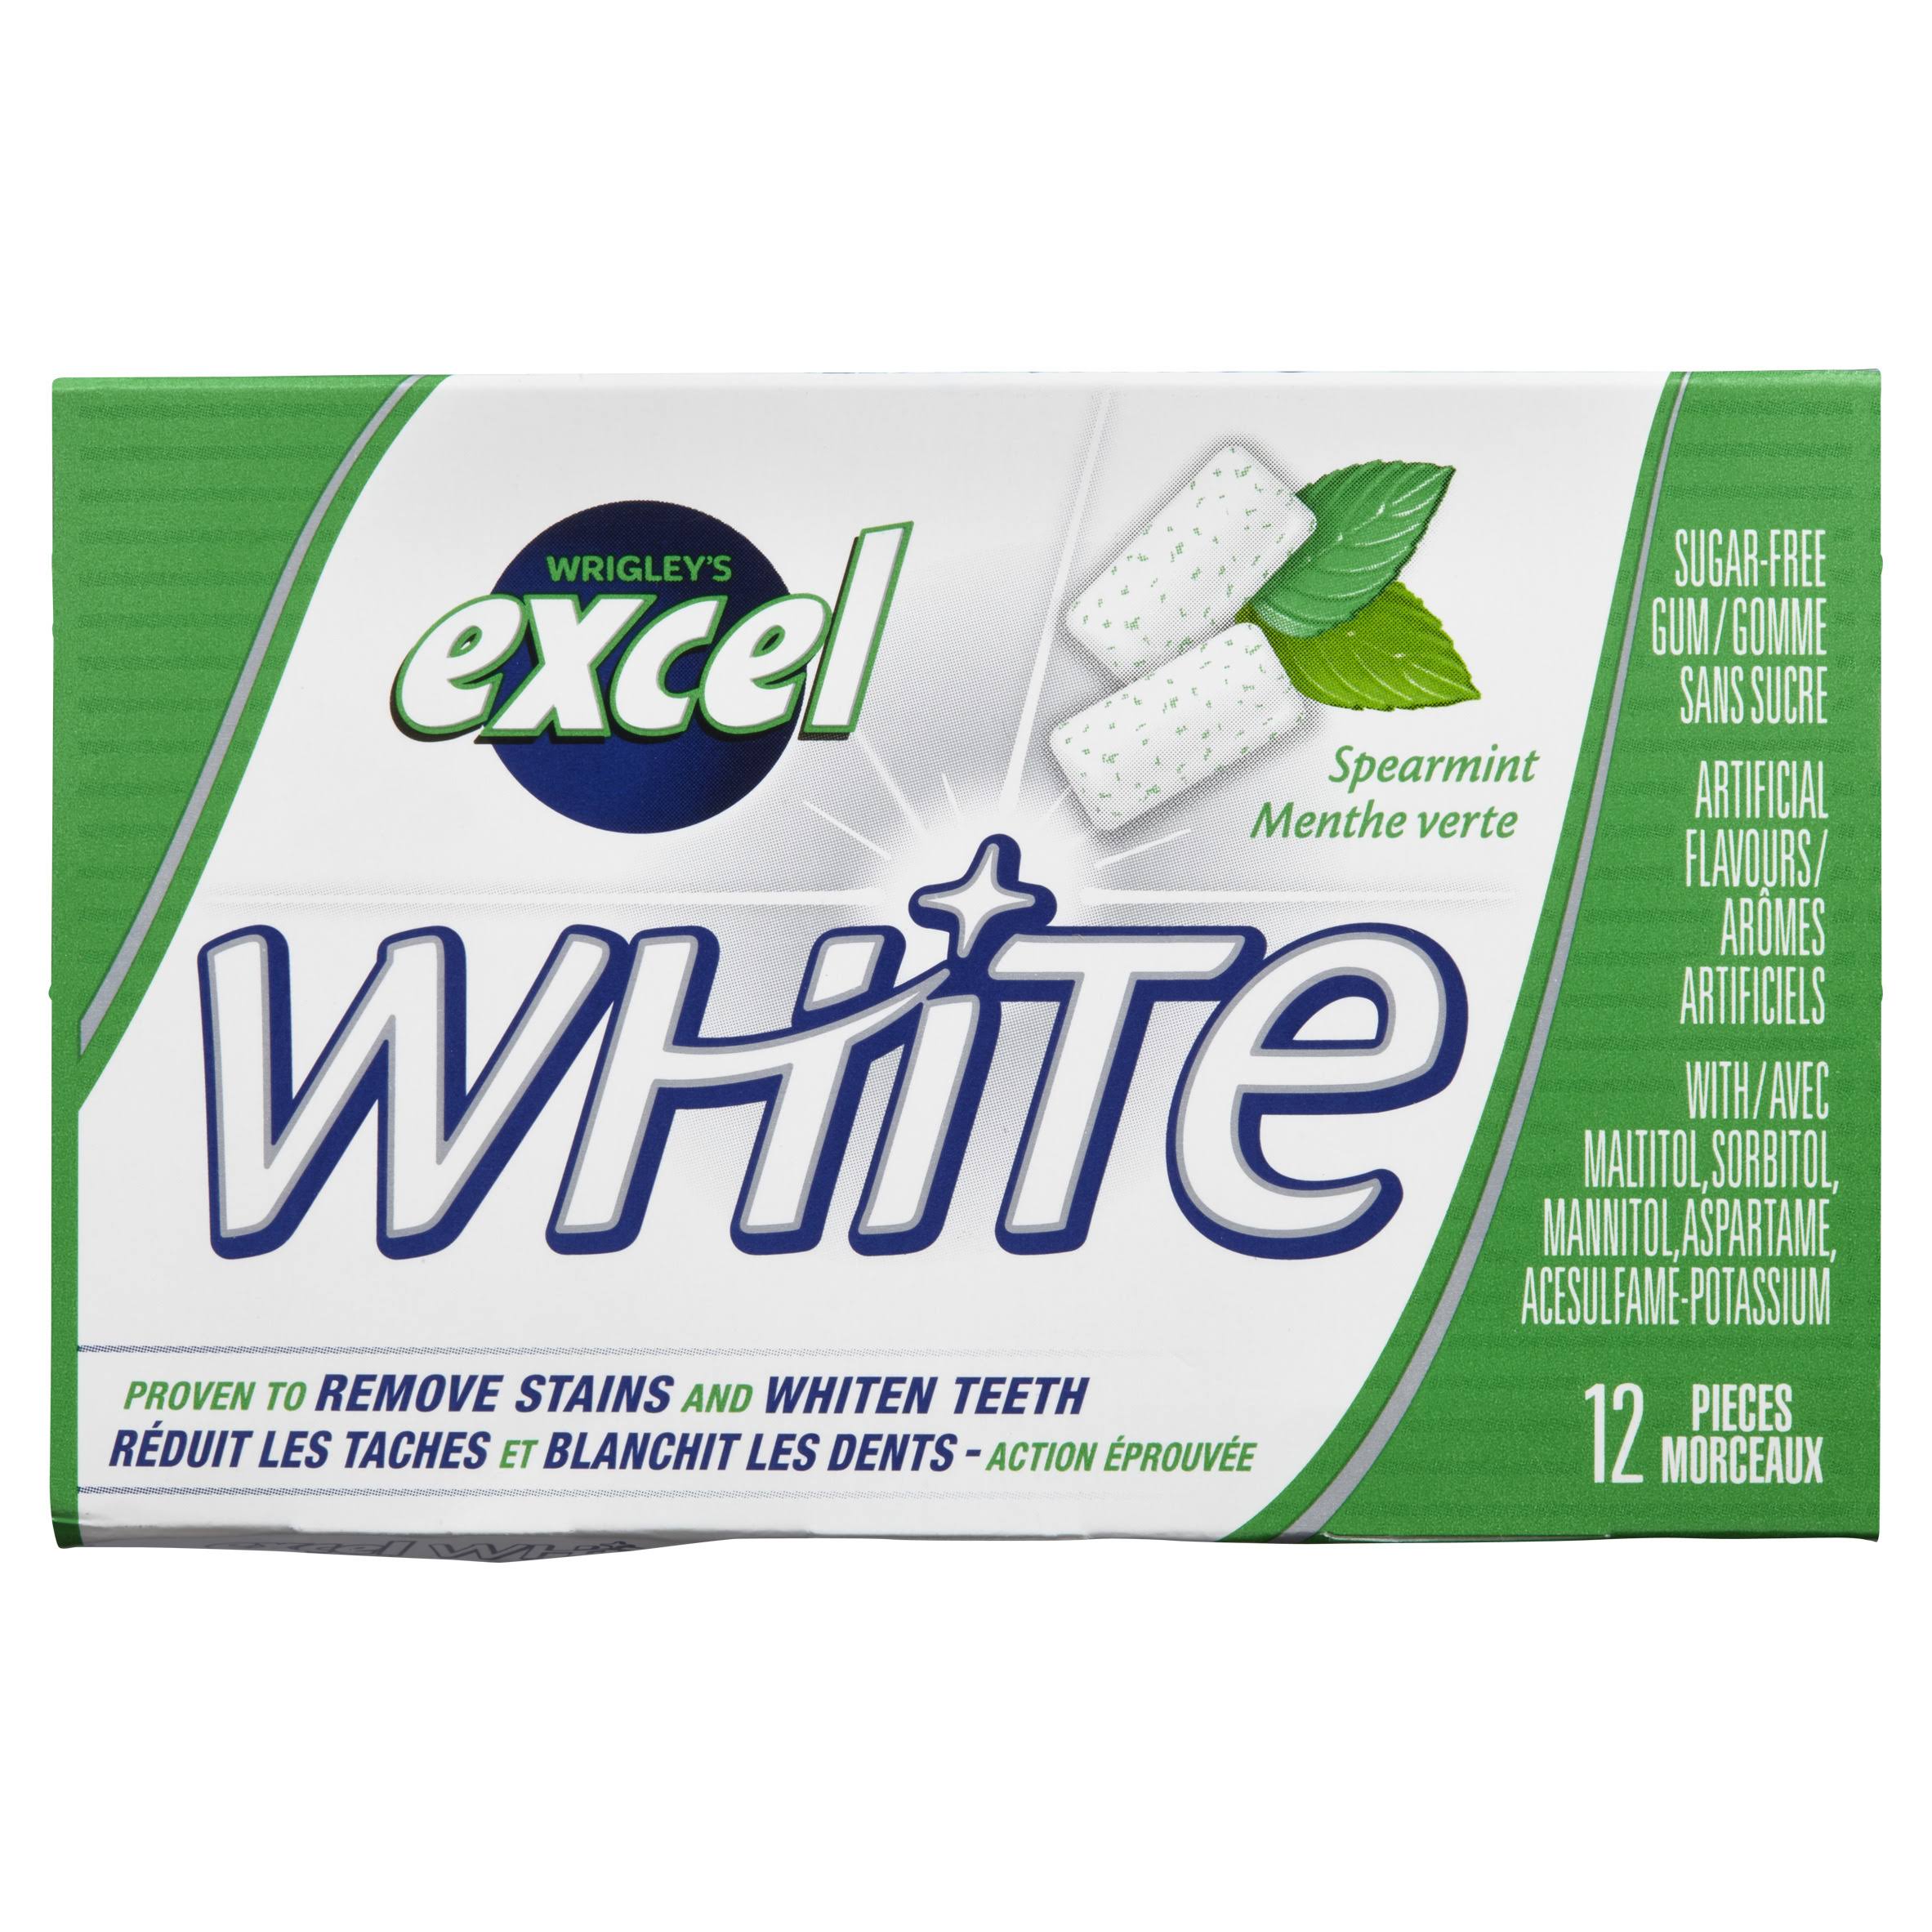 Wrigley's Excel White Gum - 12 Pieces, Spearmint